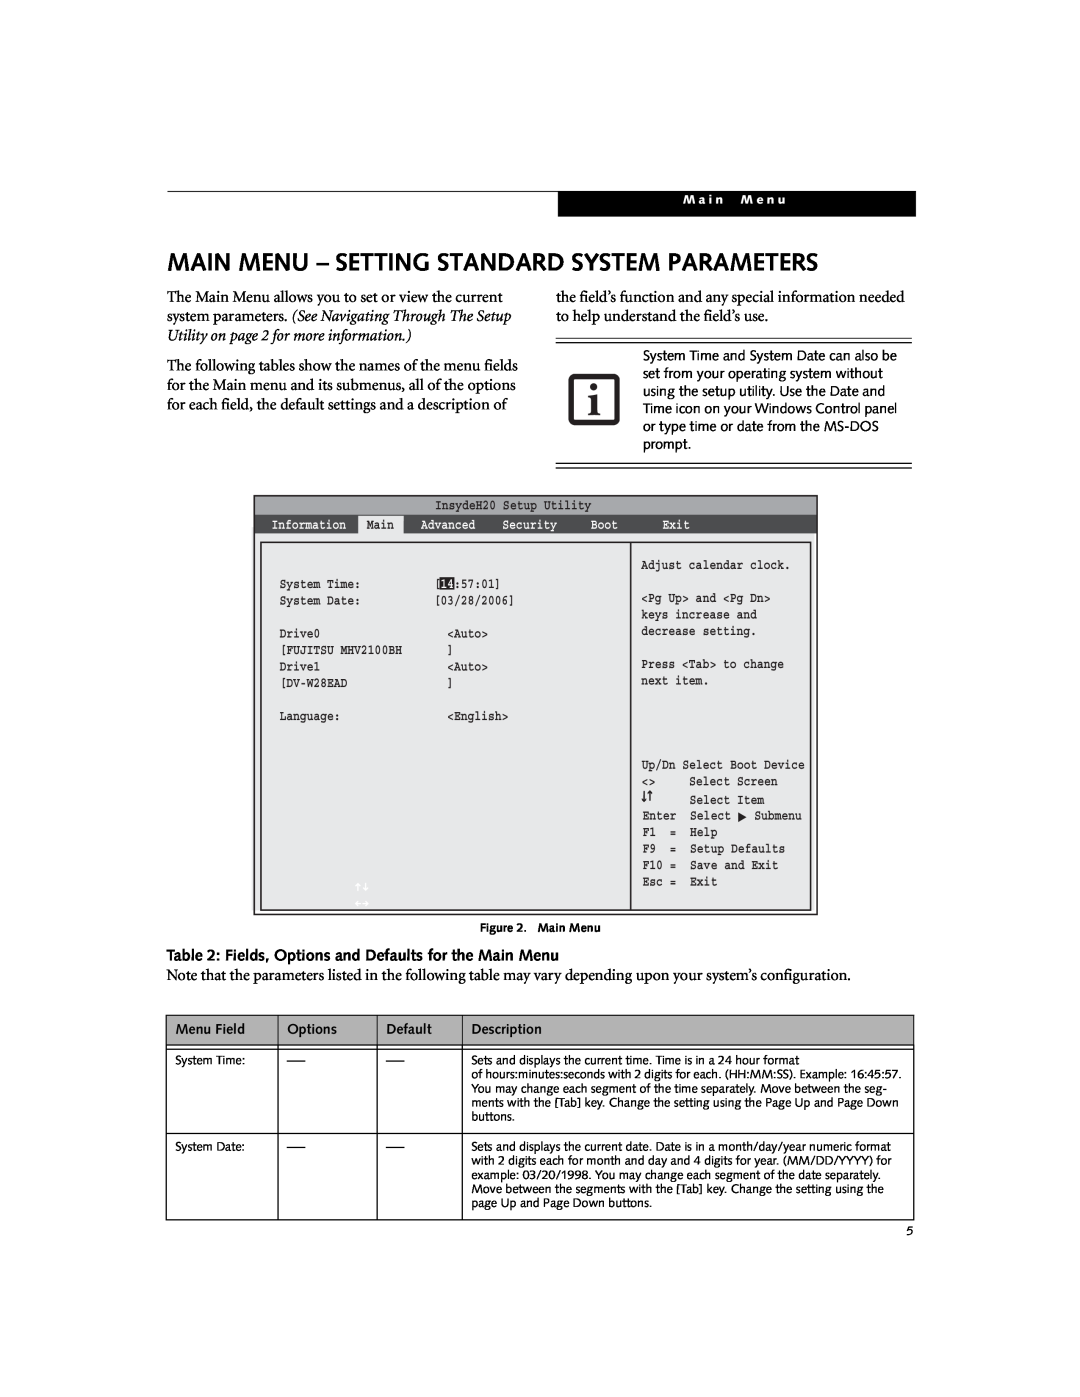 Fujitsu N3530 manual Main Menu - Setting Standard System Parameters, Fields, Options and Defaults for the Main Menu 